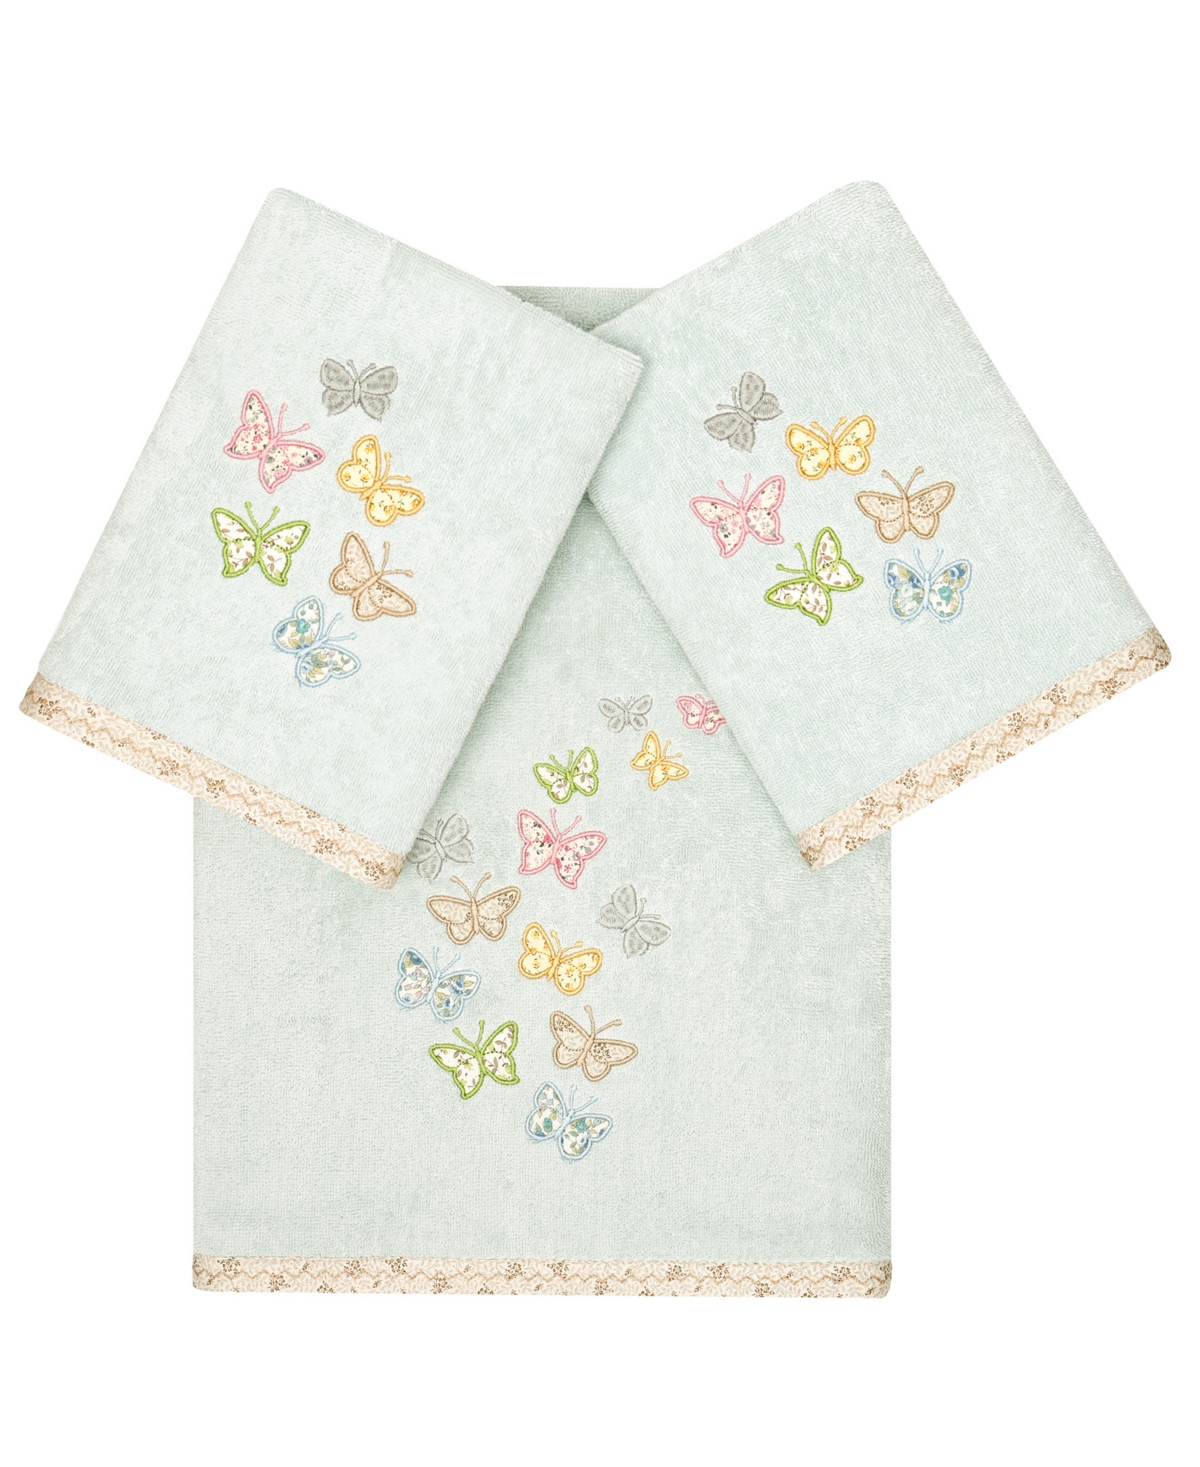 Linum Home Textiles Turkish Cotton Mariposa Embellished Towel Set, 3 Piece Bedding In Aqua